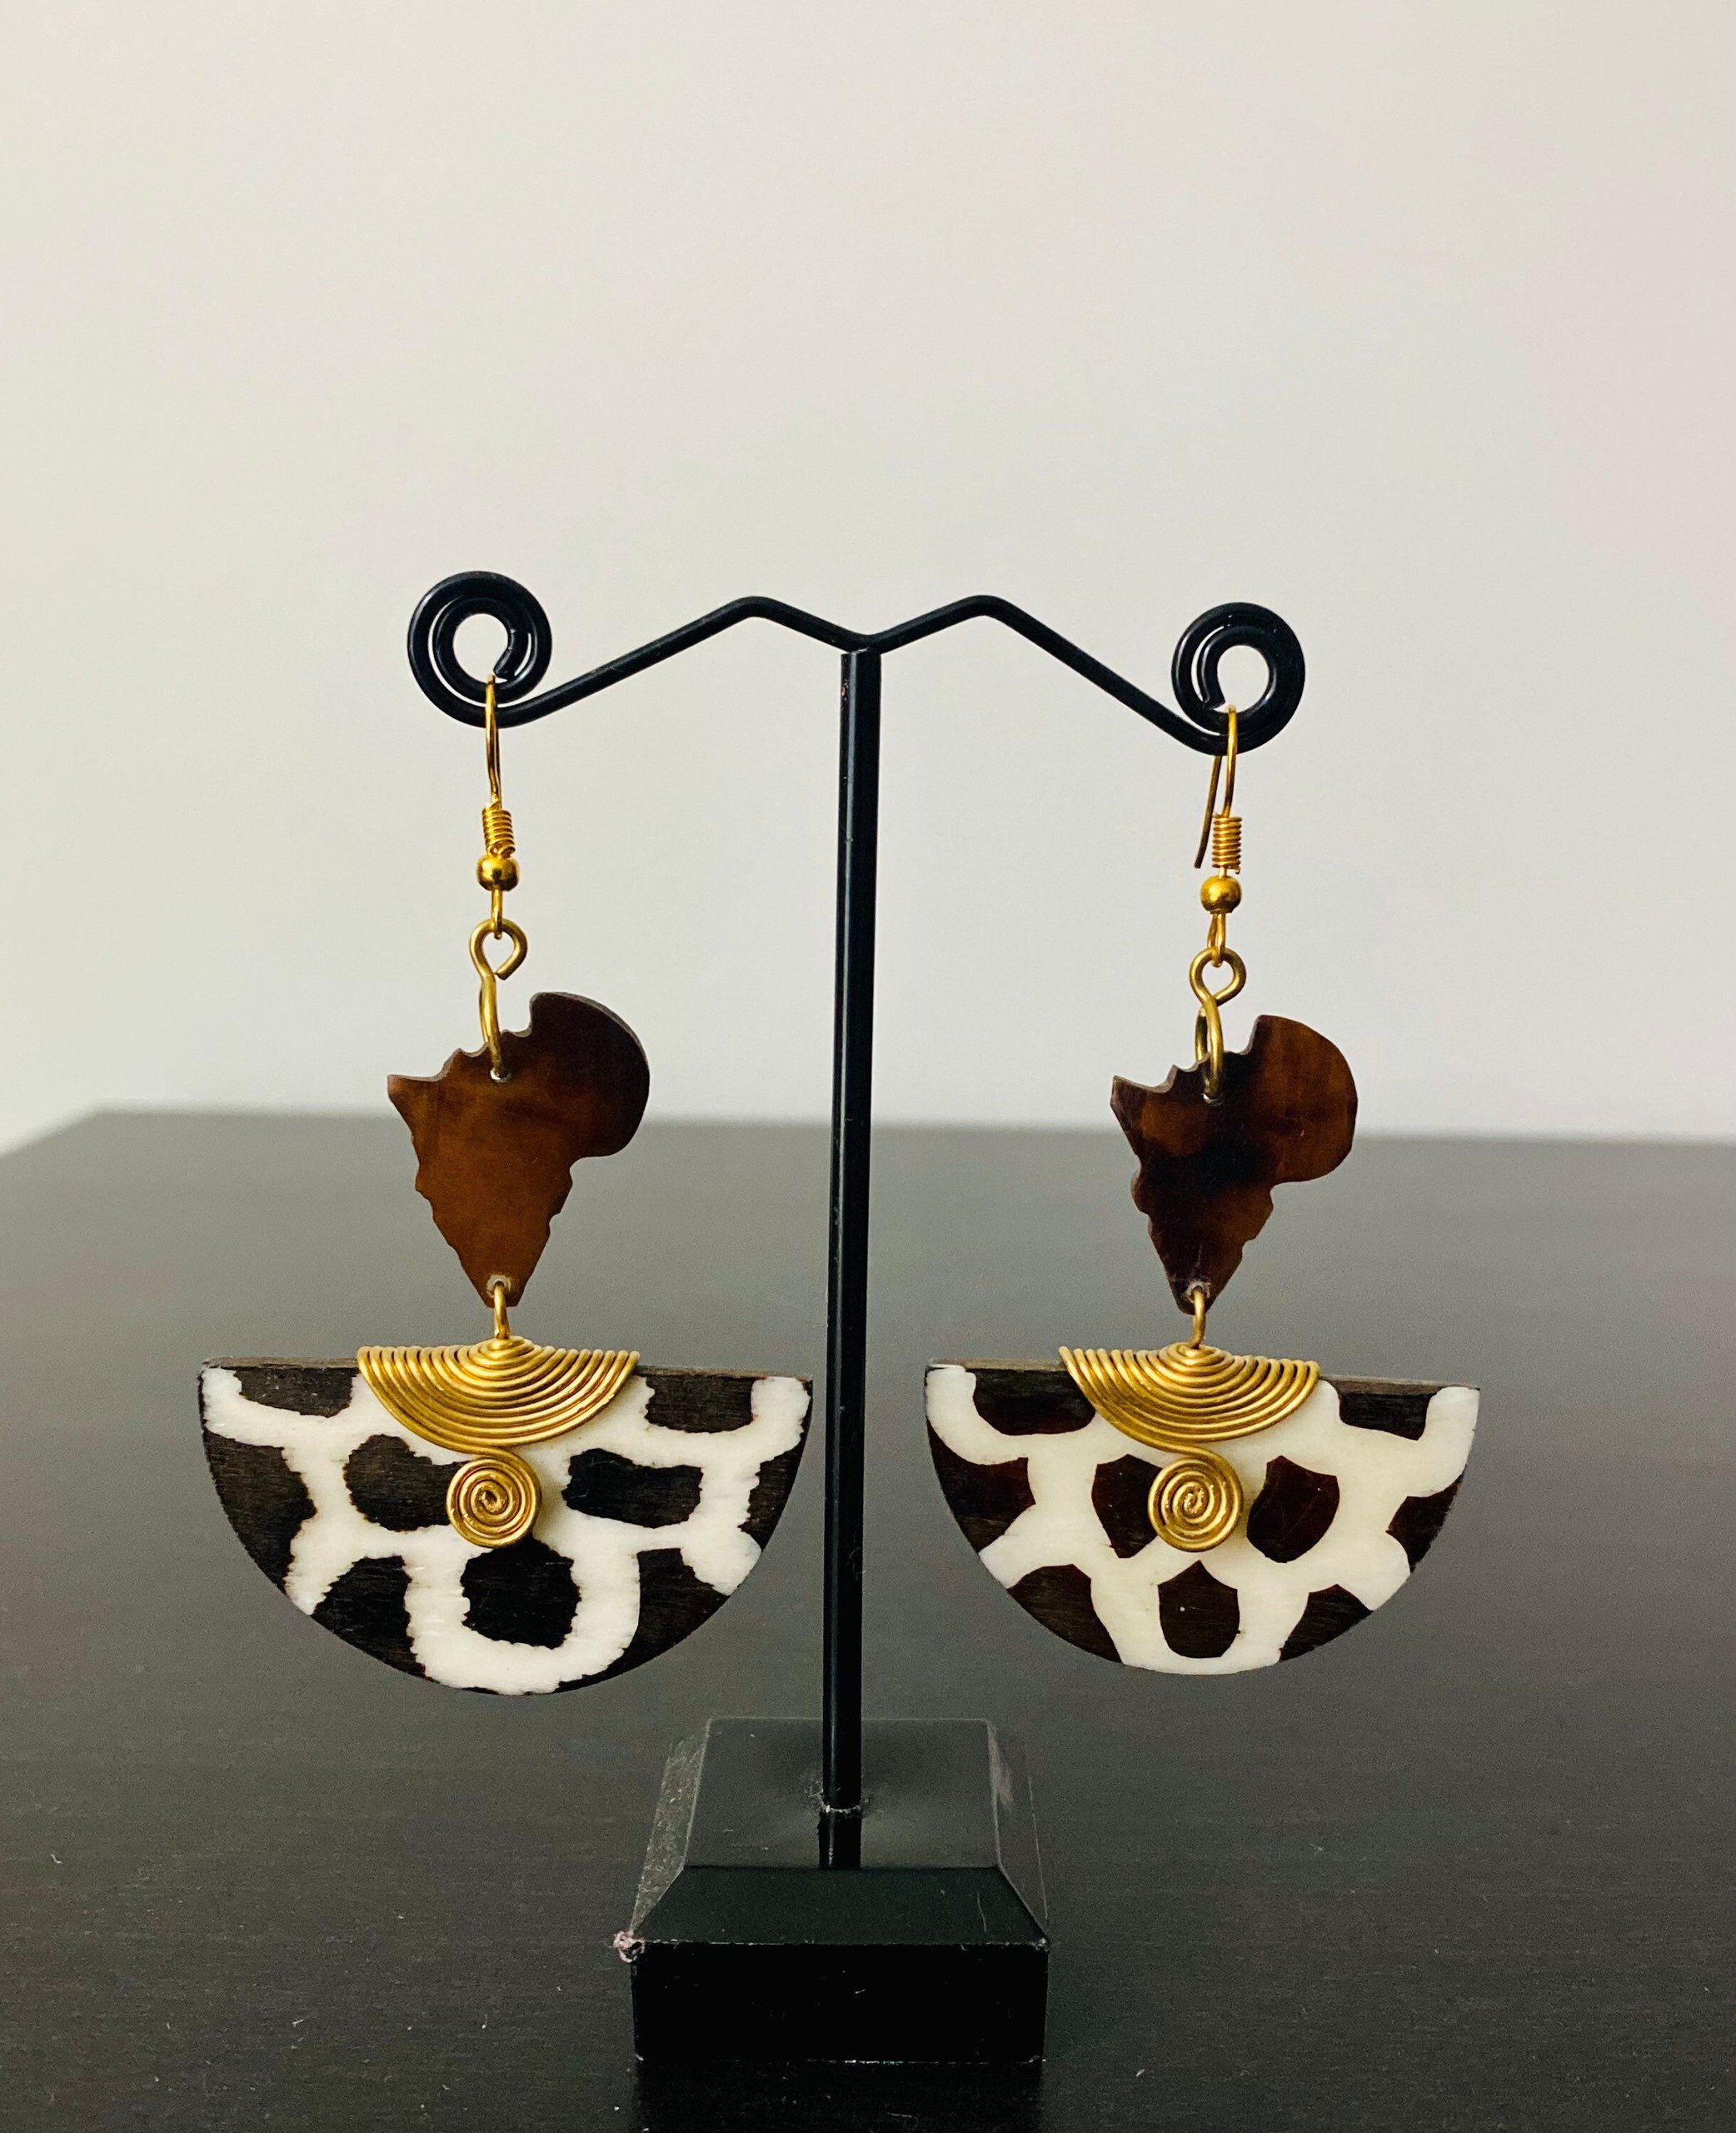 African Bone Earrings with Giraffe Print